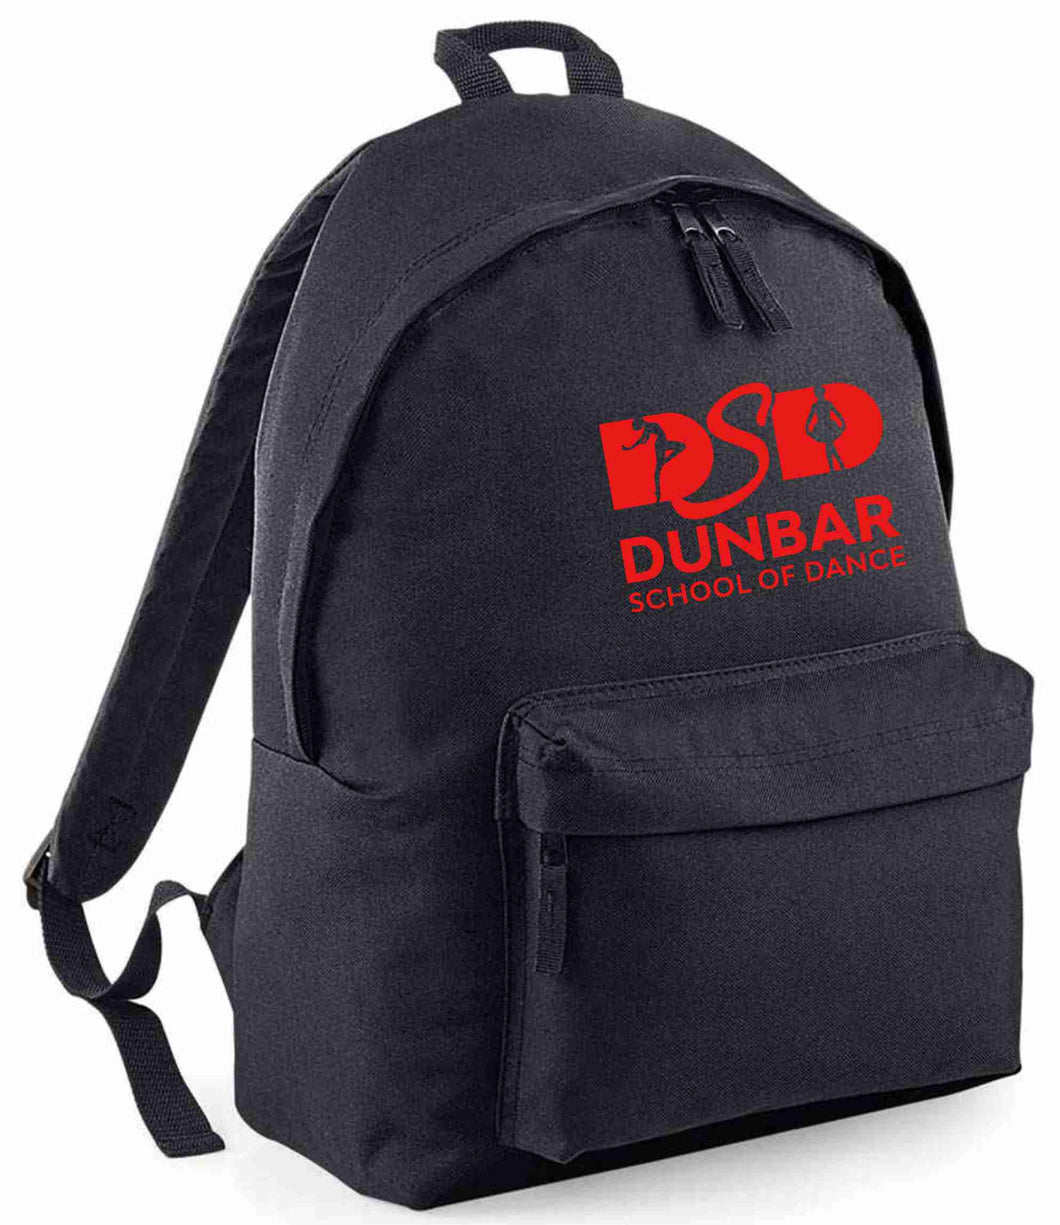 Dunbar School of Dancing Backpack